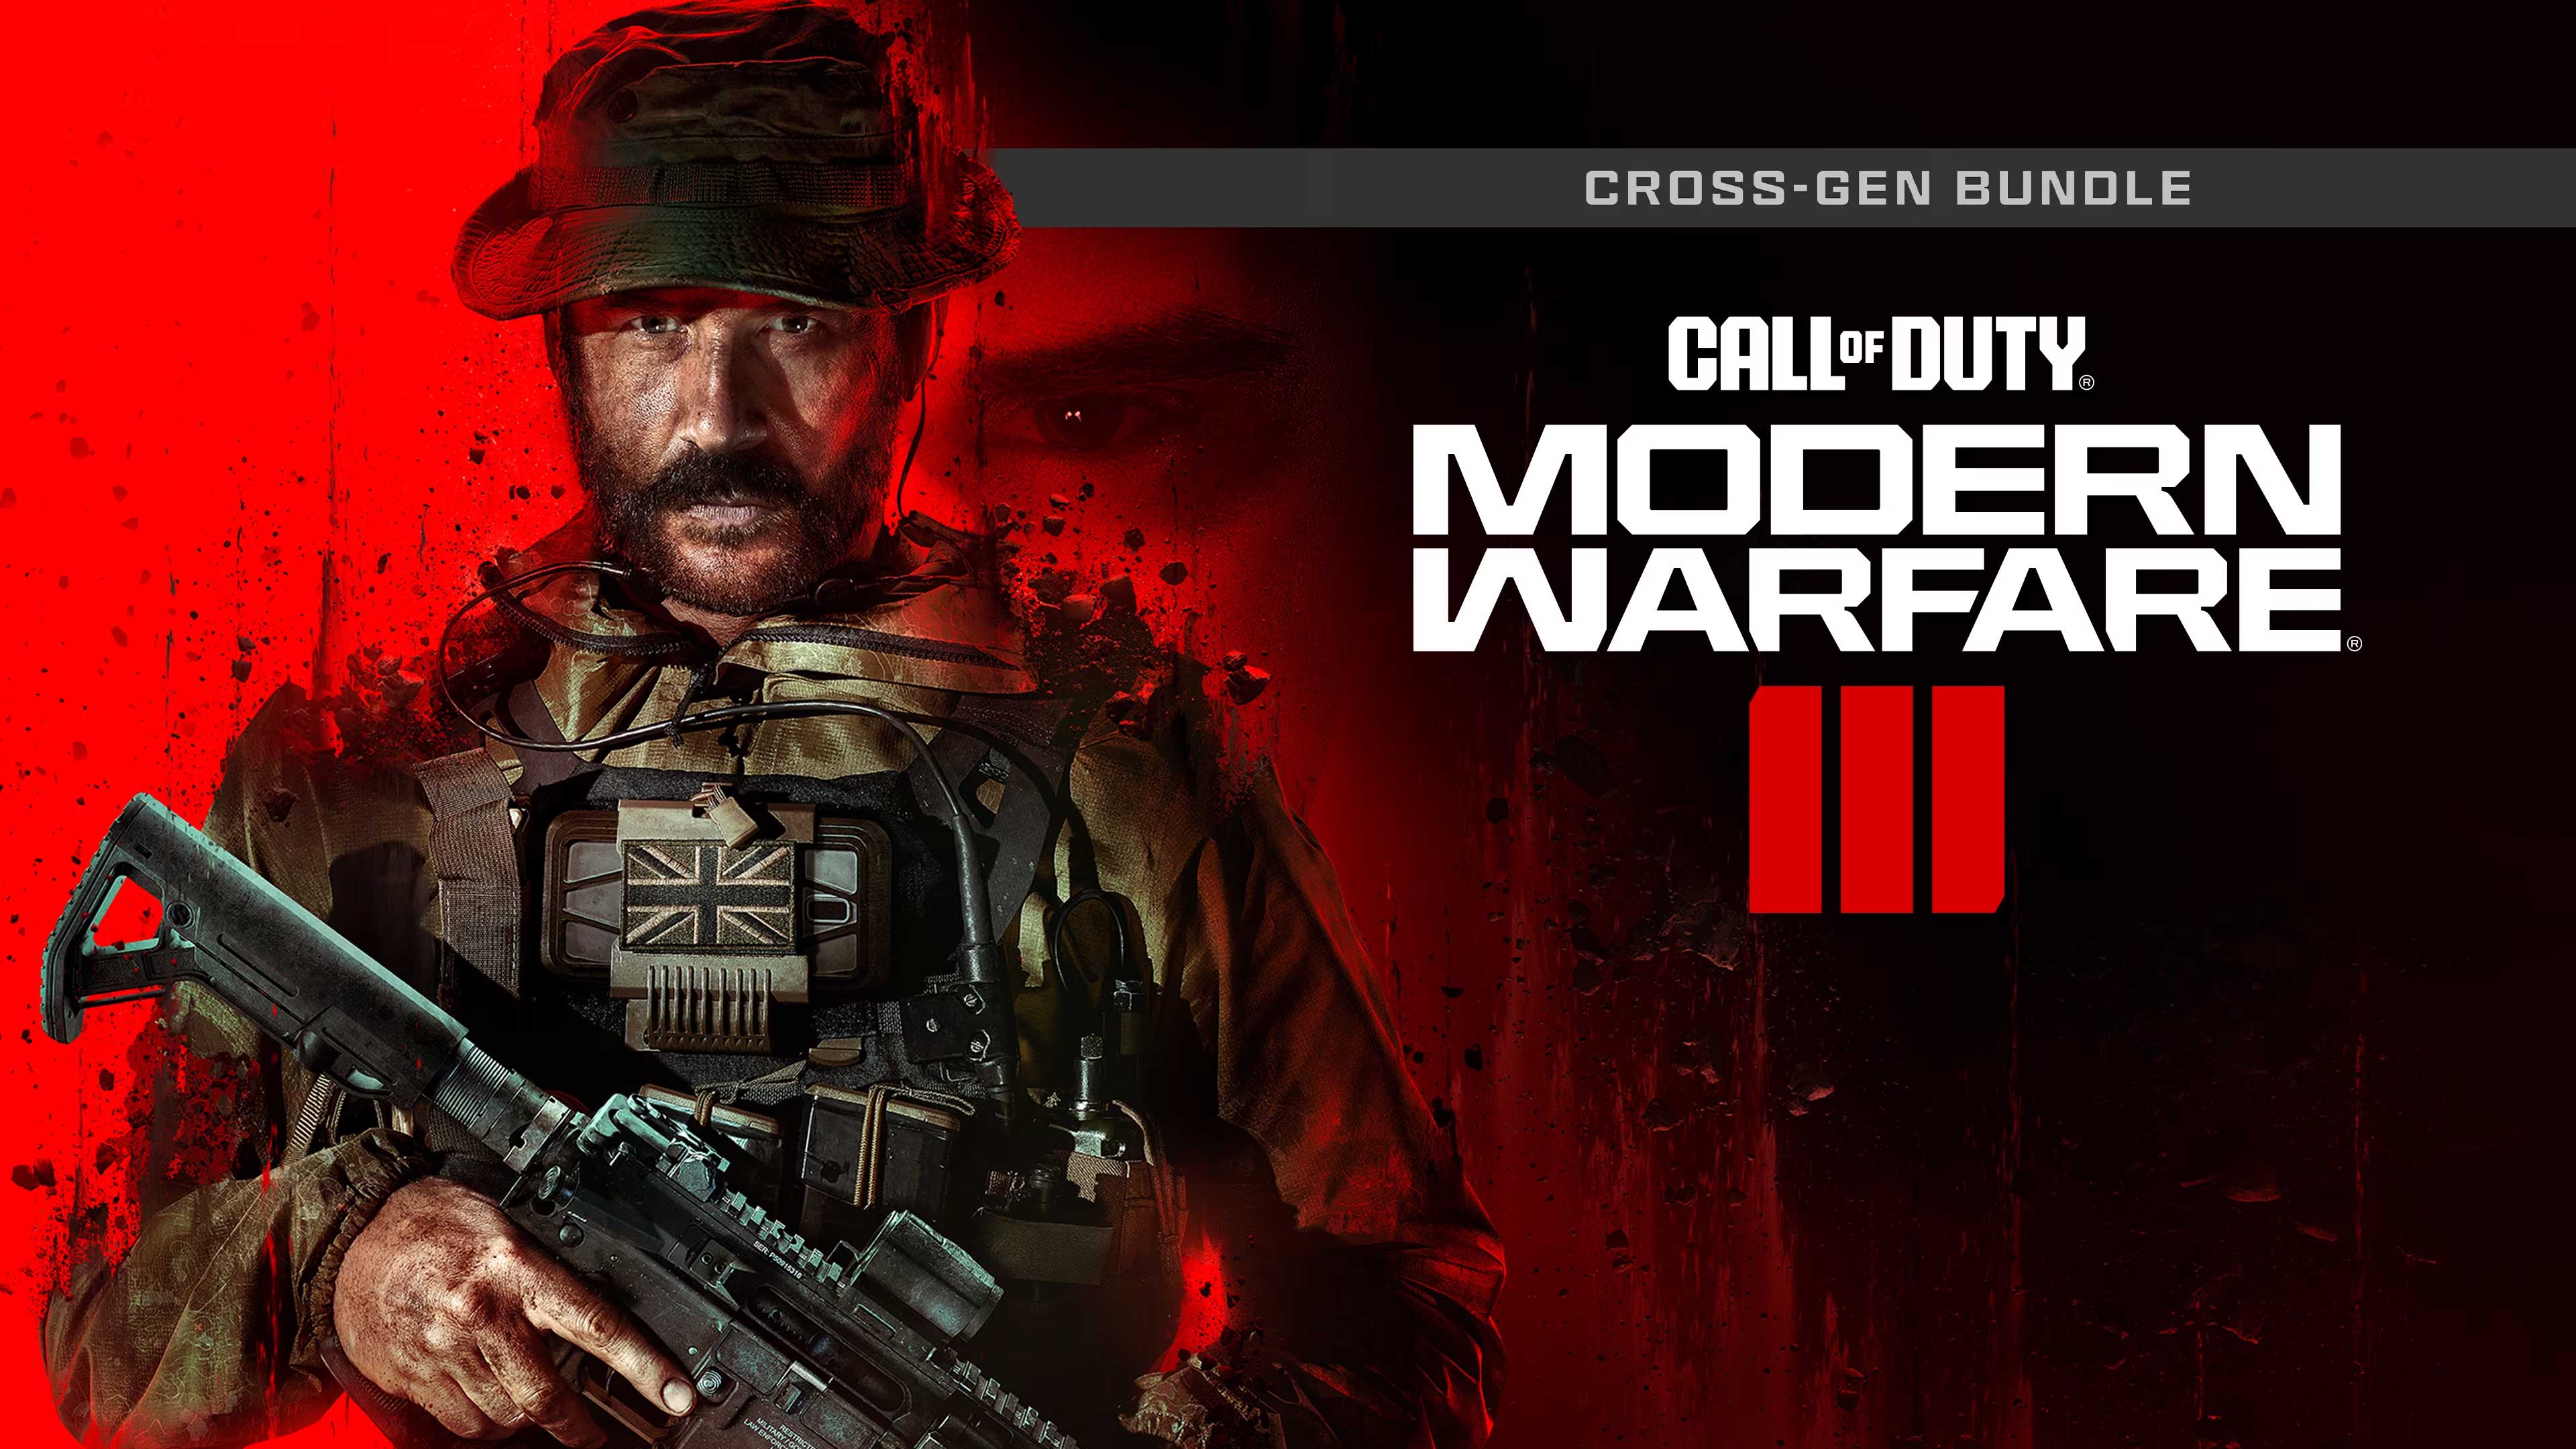 Call of Duty: Modern Warfare III - Cross-Gen Bundle, Issa Vibe Games, issavibegames.com